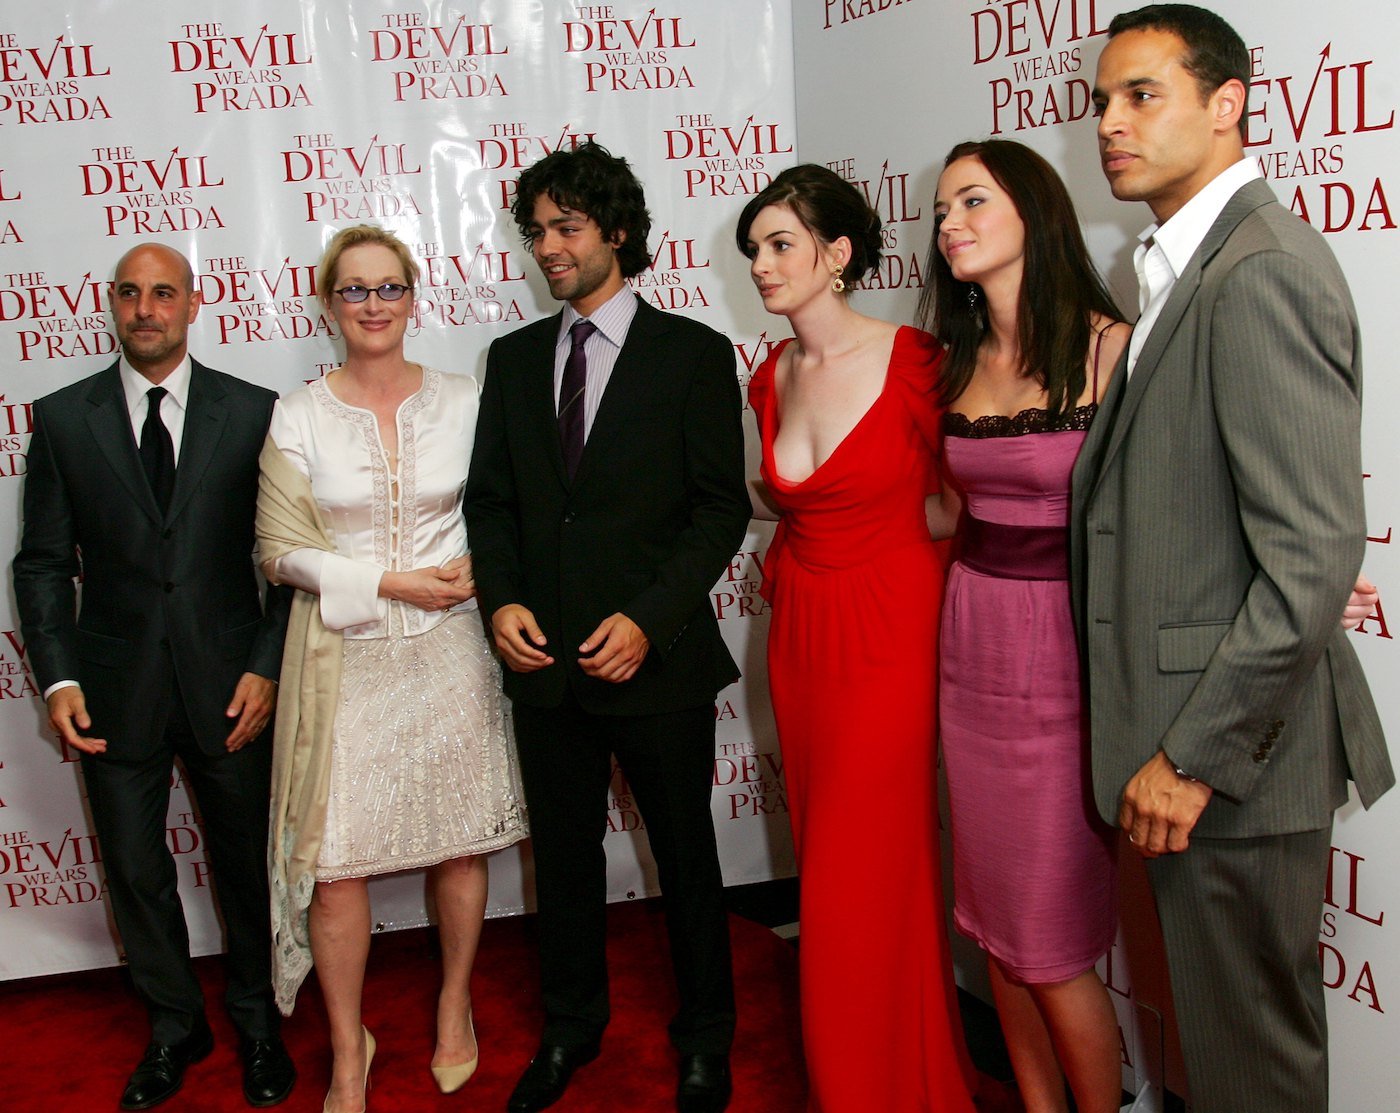 'The Devil Wears Prada' cast Stanley Tucci, Meryl Streep, Adrian Grenier, Anne Hathaway, Emily Blunt and Daniel Sunjata on the red carpet